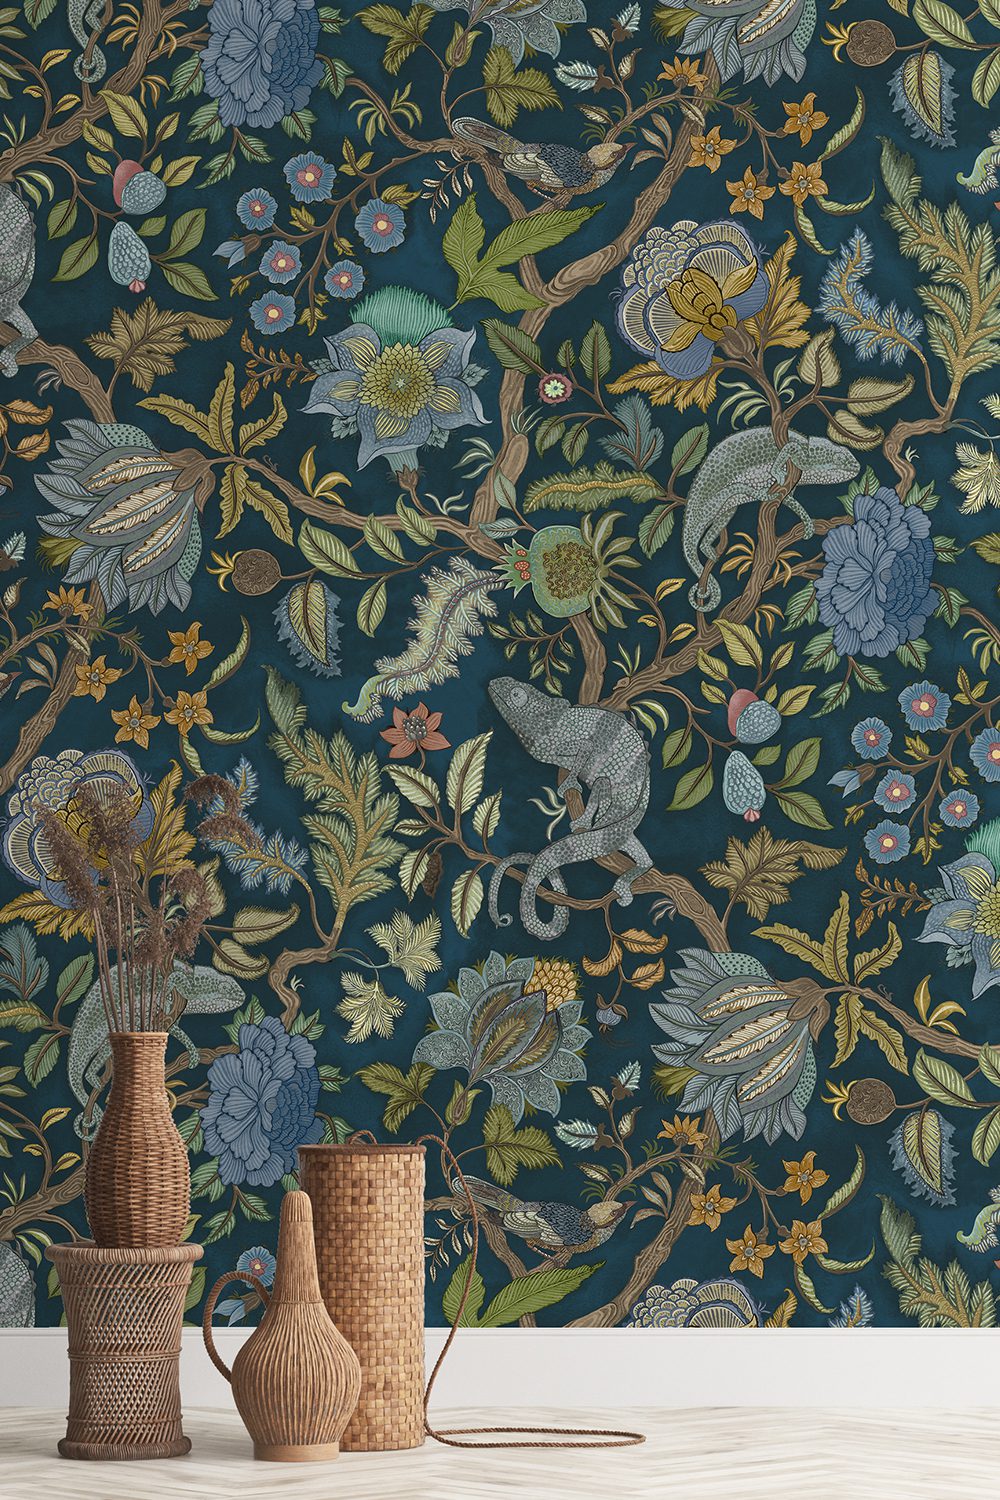 Josephine-munsey-wallpapers-interiors-chameleon-trail-floral-green-blue-wallpaper